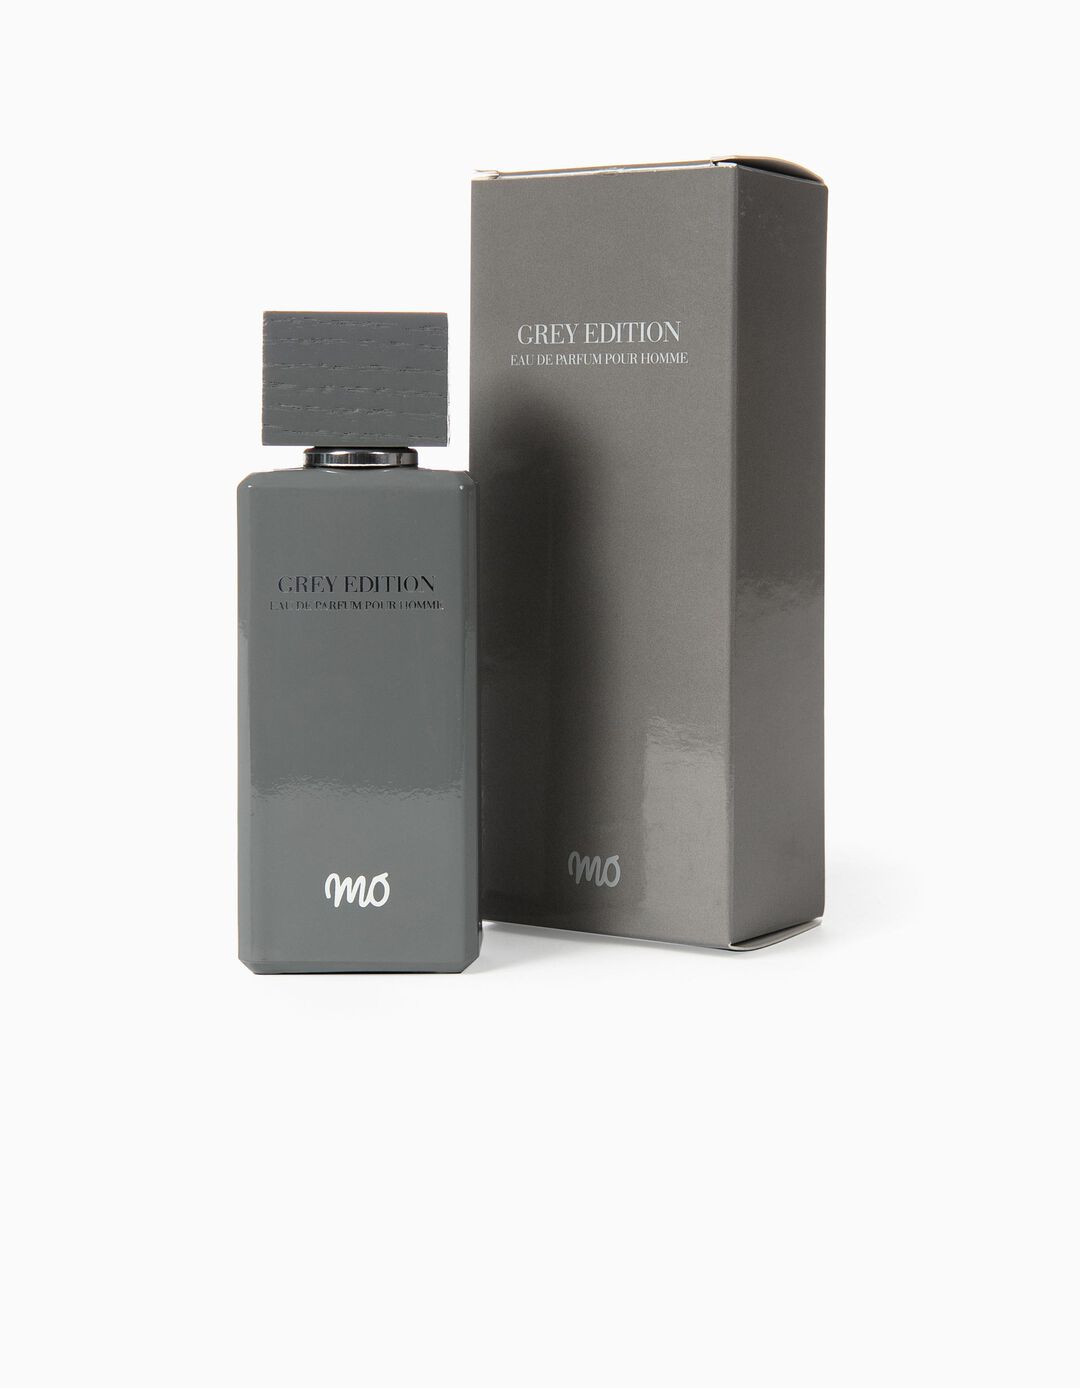 Grey Edition Eau de parfum 50ml